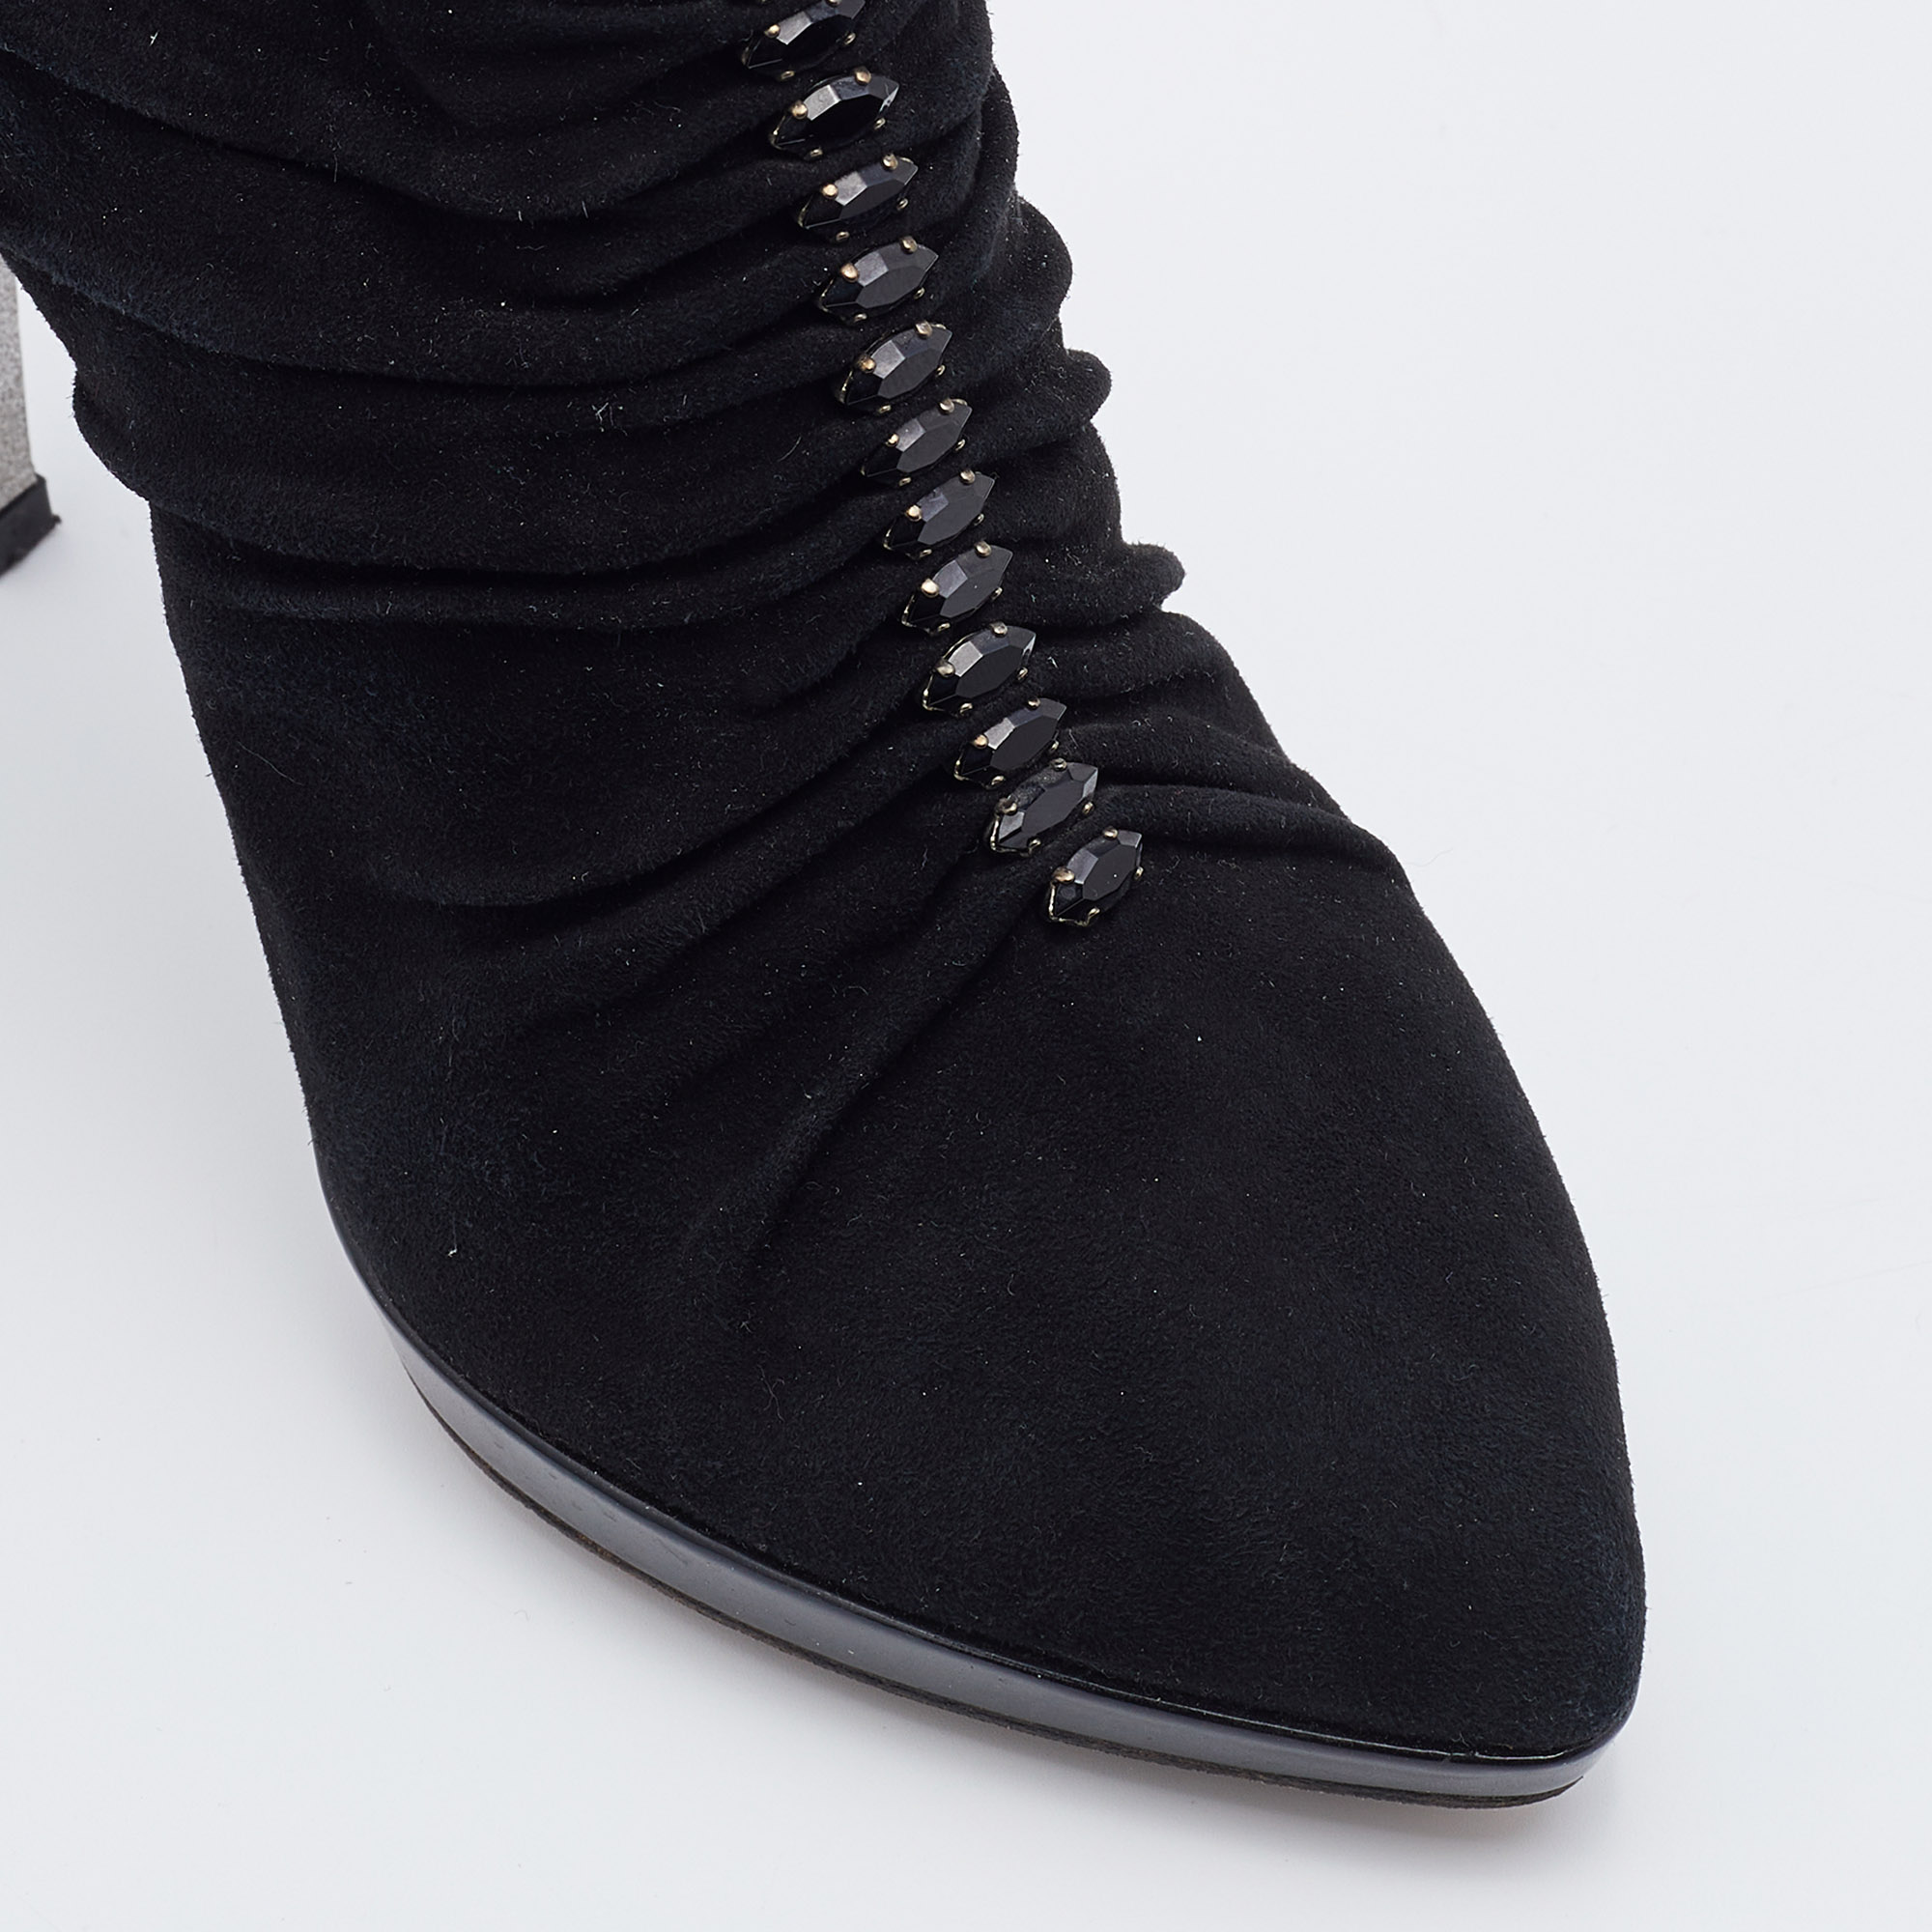 René Caovilla Black Suede Crystal Embellished Ankle Length Boots Size 39